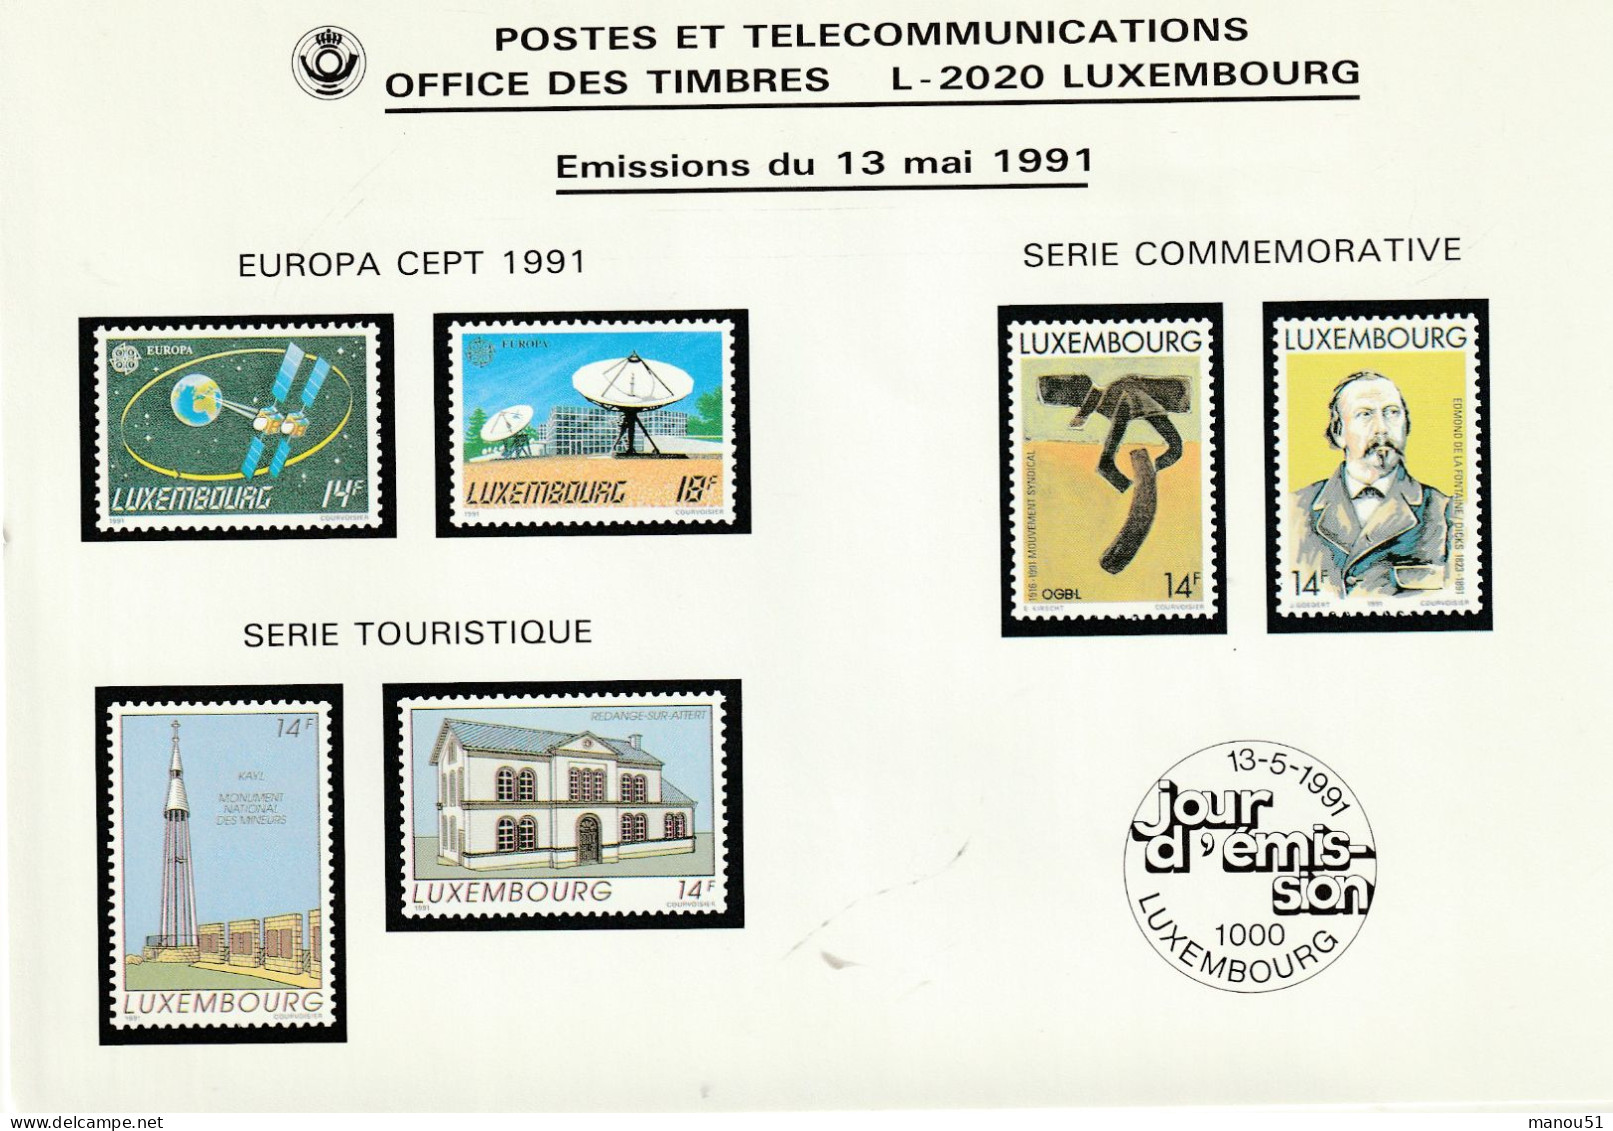 LUXEMBOURG - Emission Du 13.05.1991 - Lot 6 Timbres + 3 Enveloppes 1er Jour - Neufs